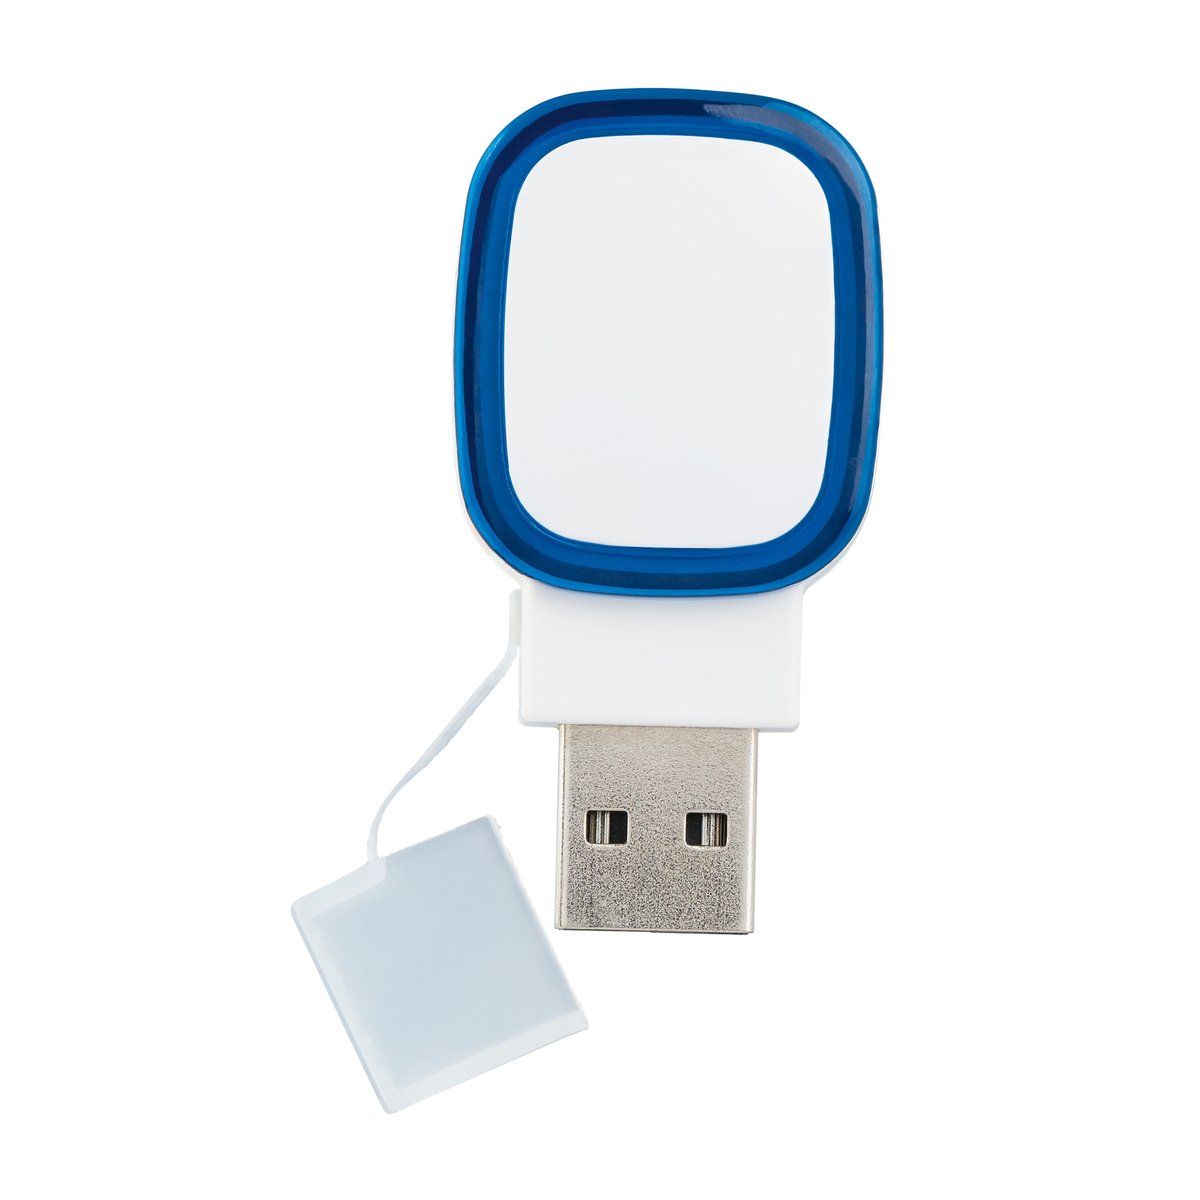 Clé USB COLLECTION 500 bleu 8Go